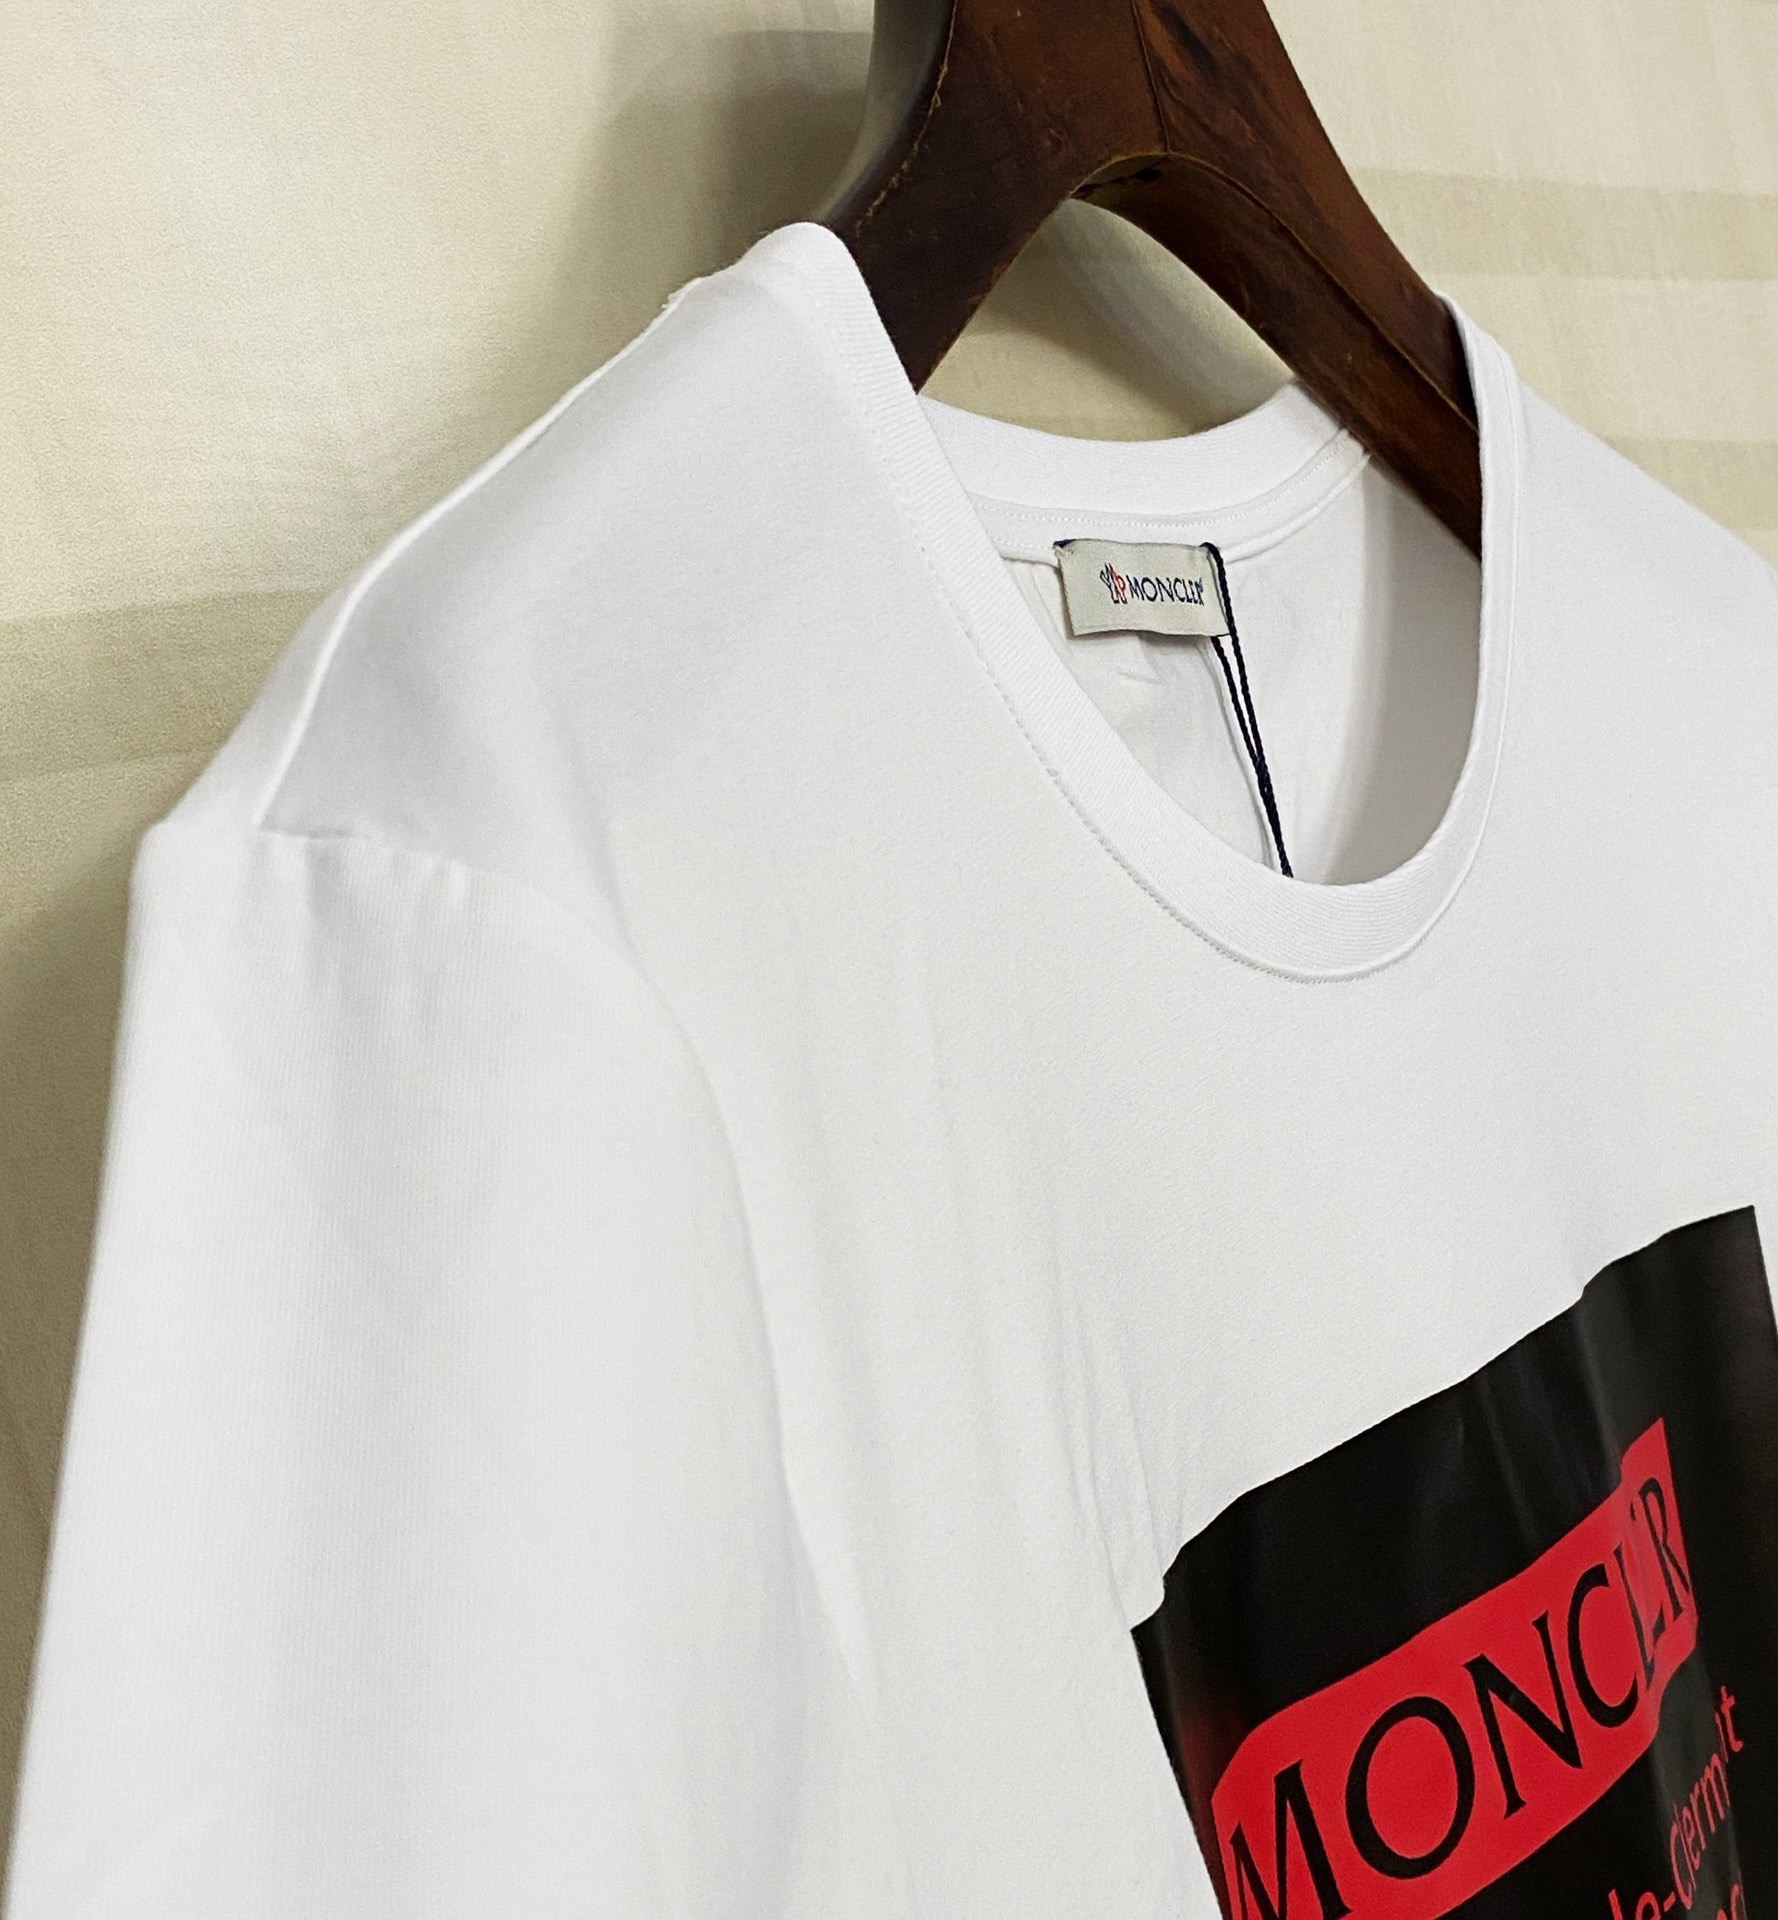 M0nc1er 2020 short-sleeved men's T-shirt with oversized logo, round neck, not fading